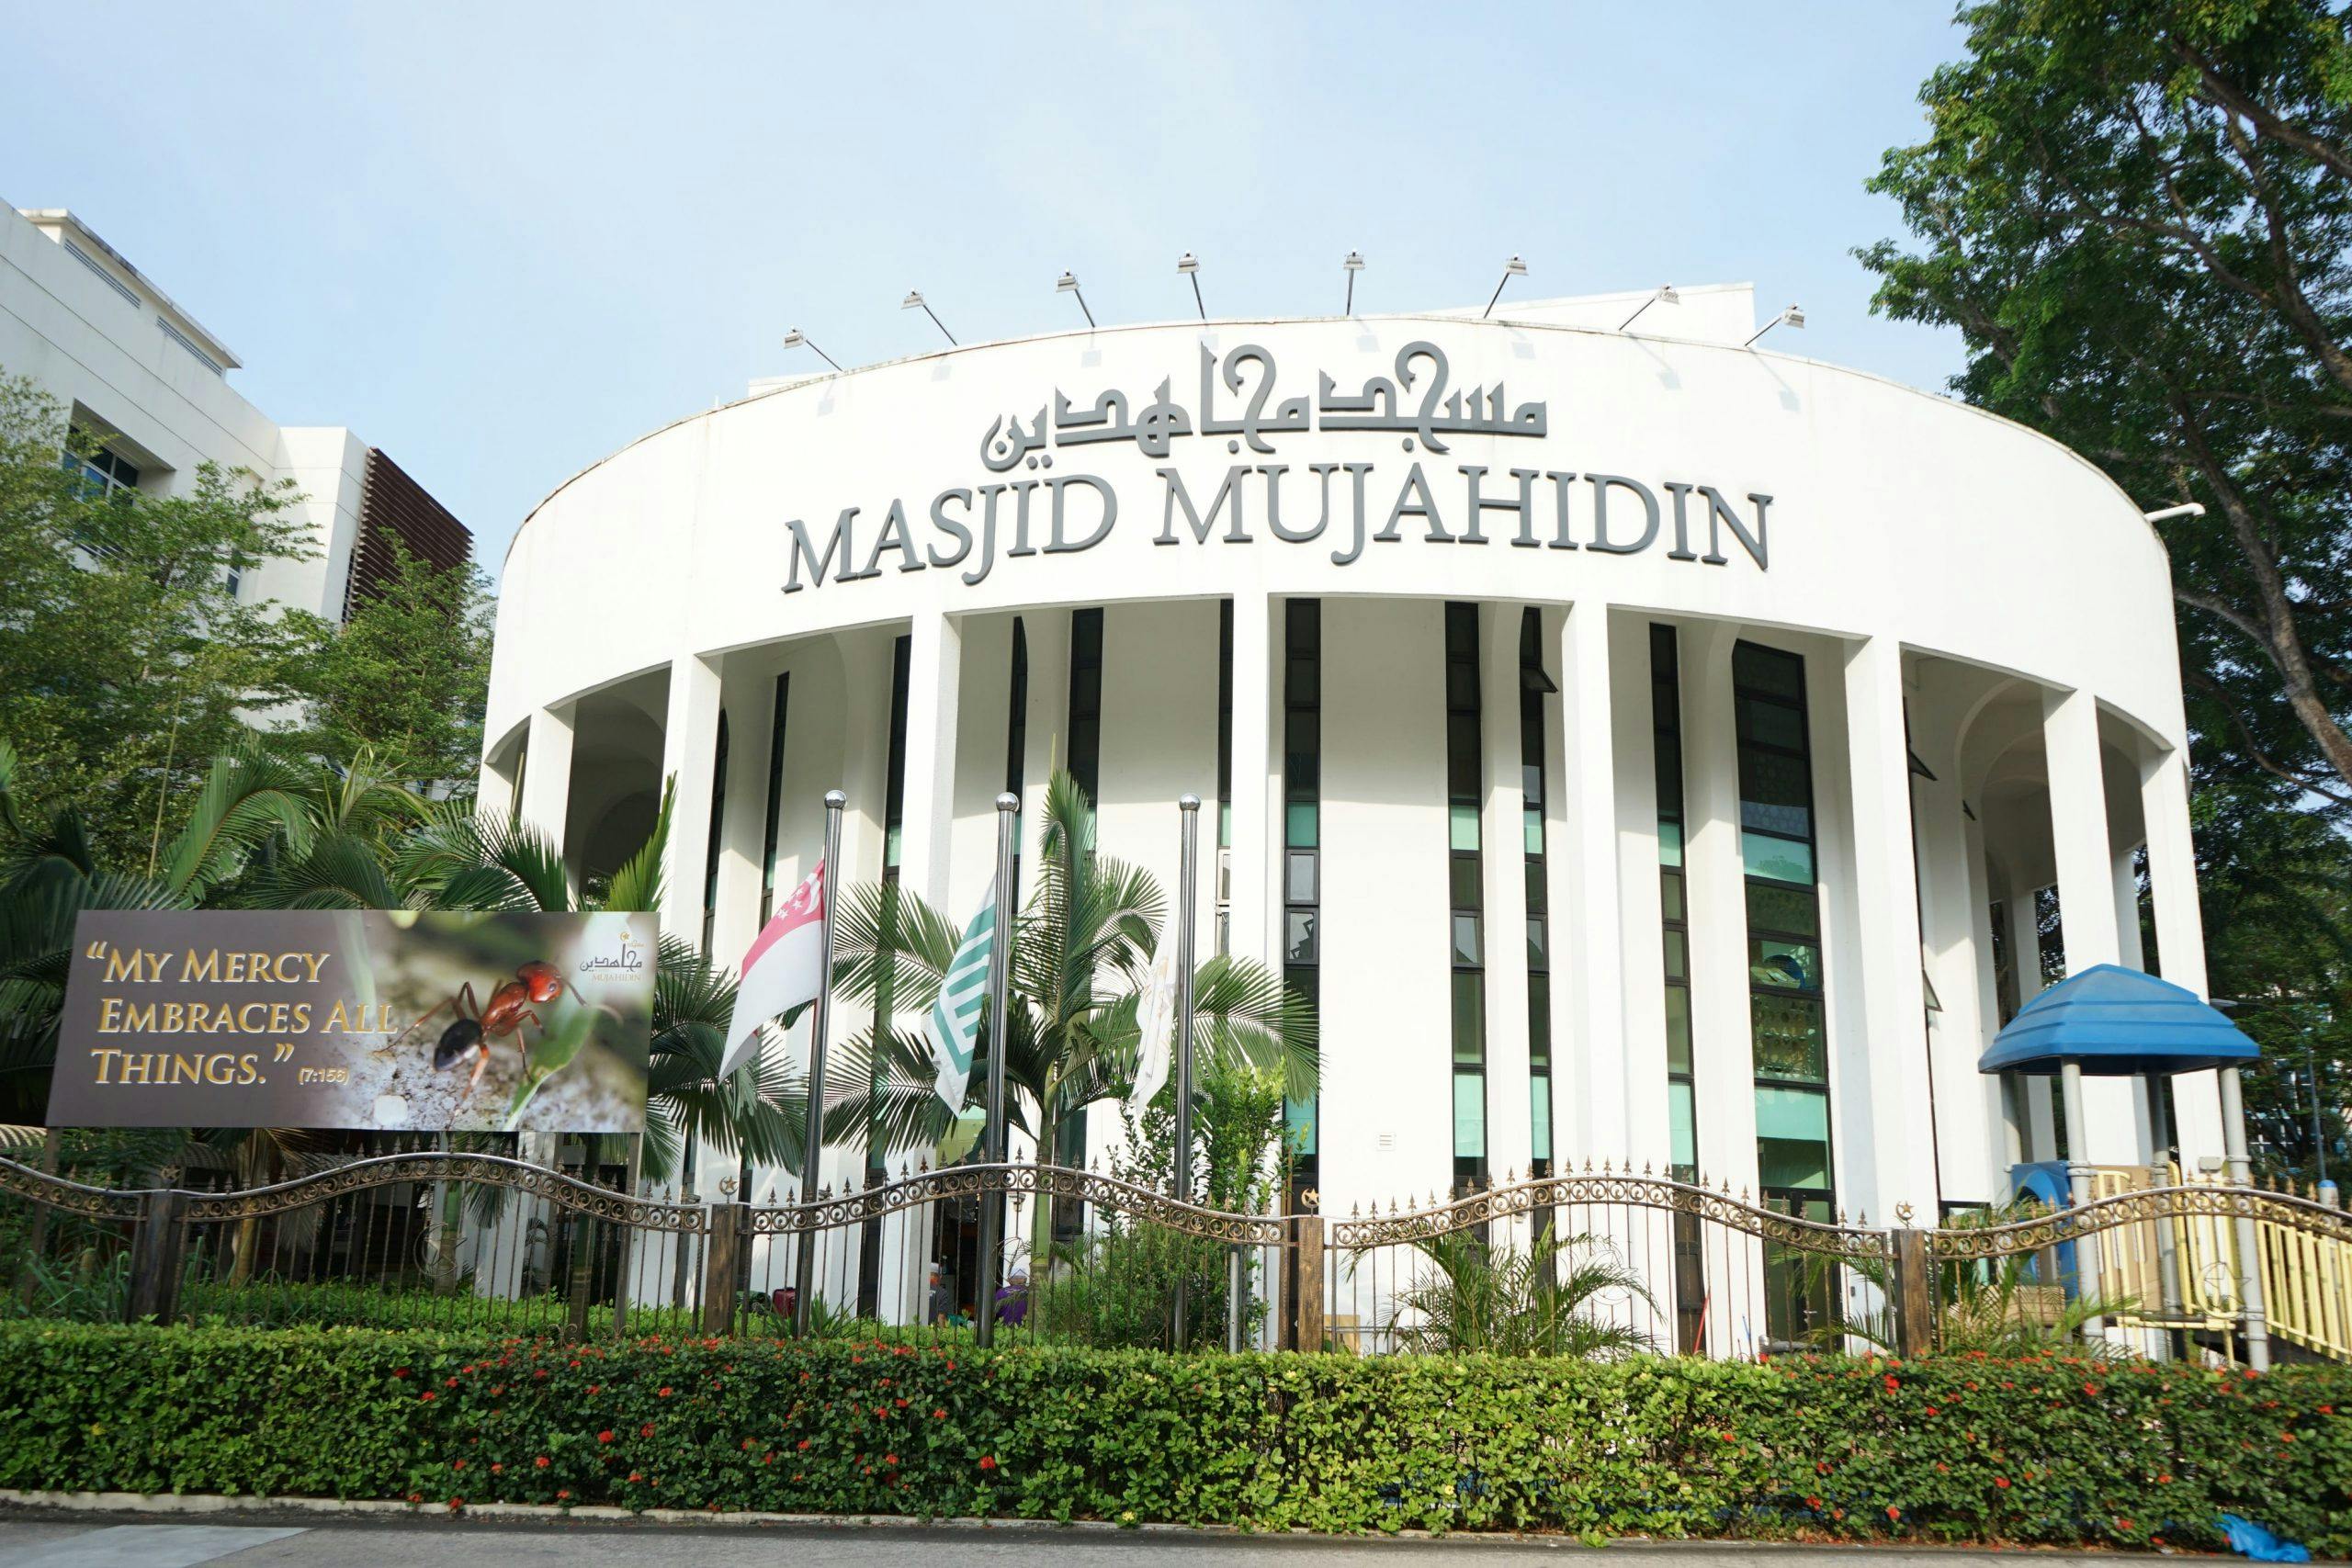 Masjid Mujahidin Singapore